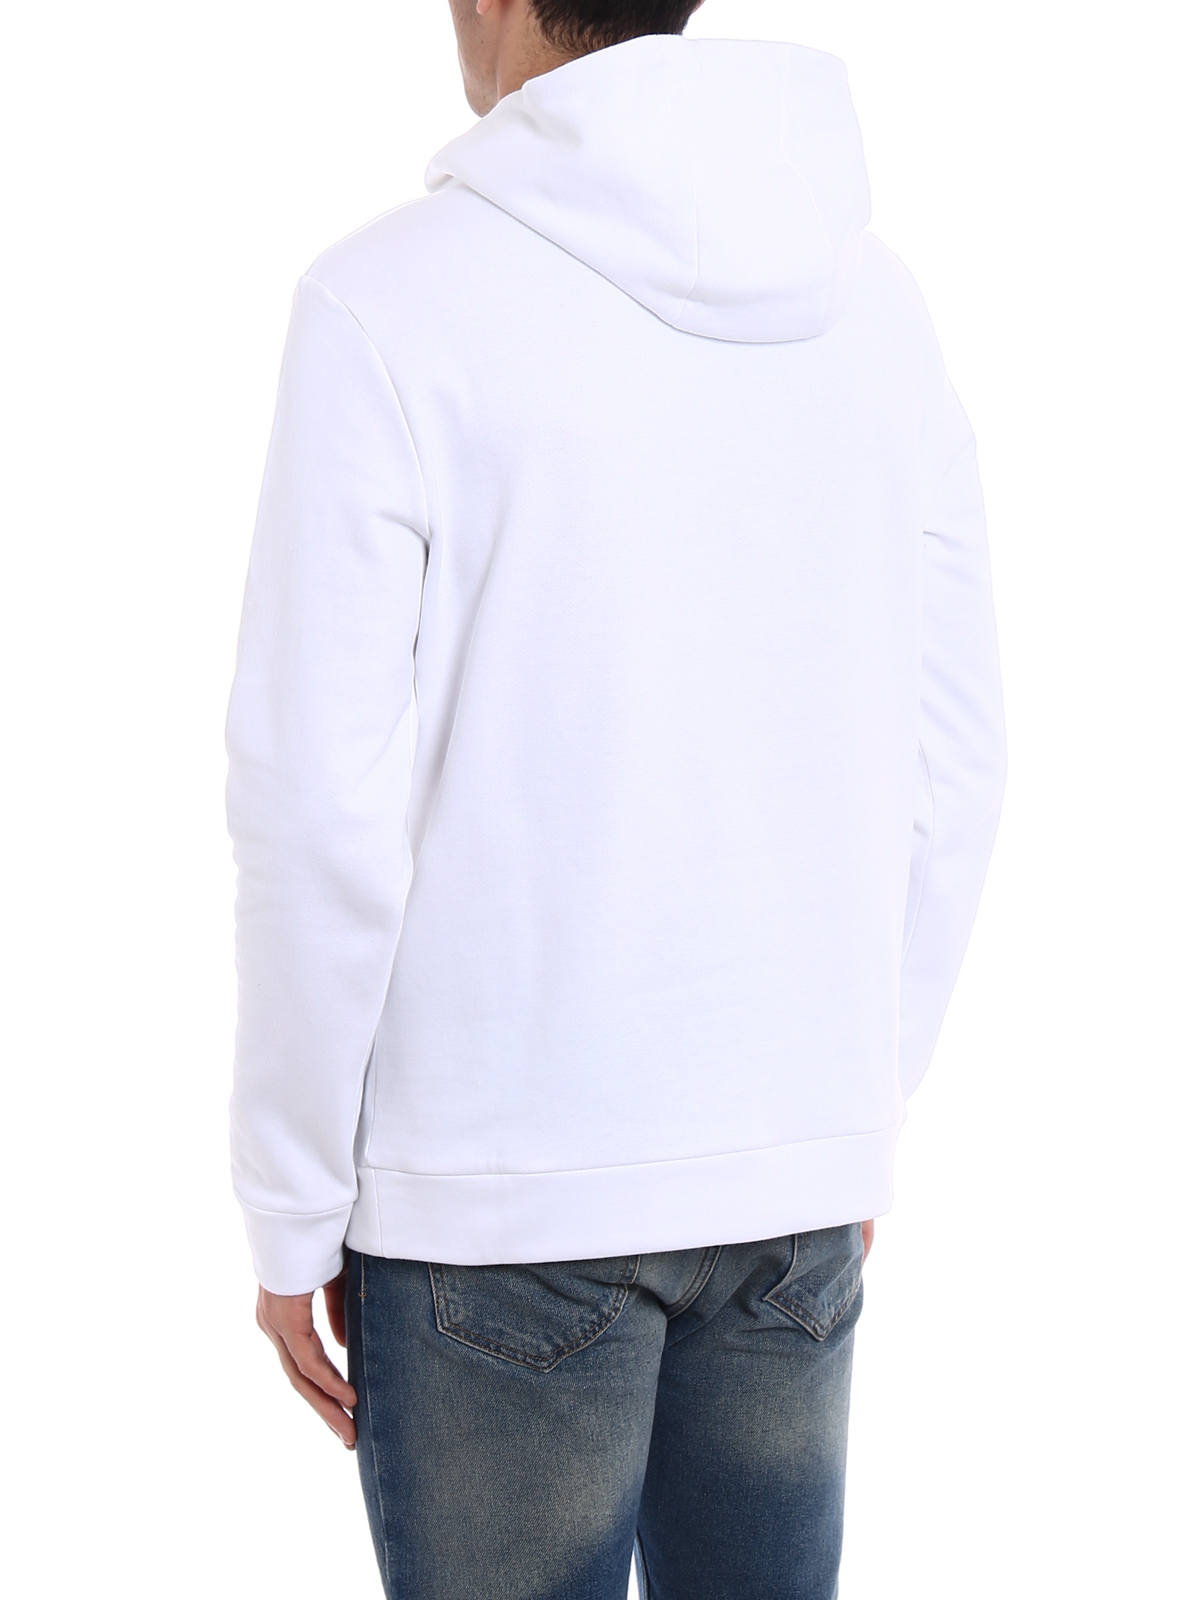 fendi white hoodie